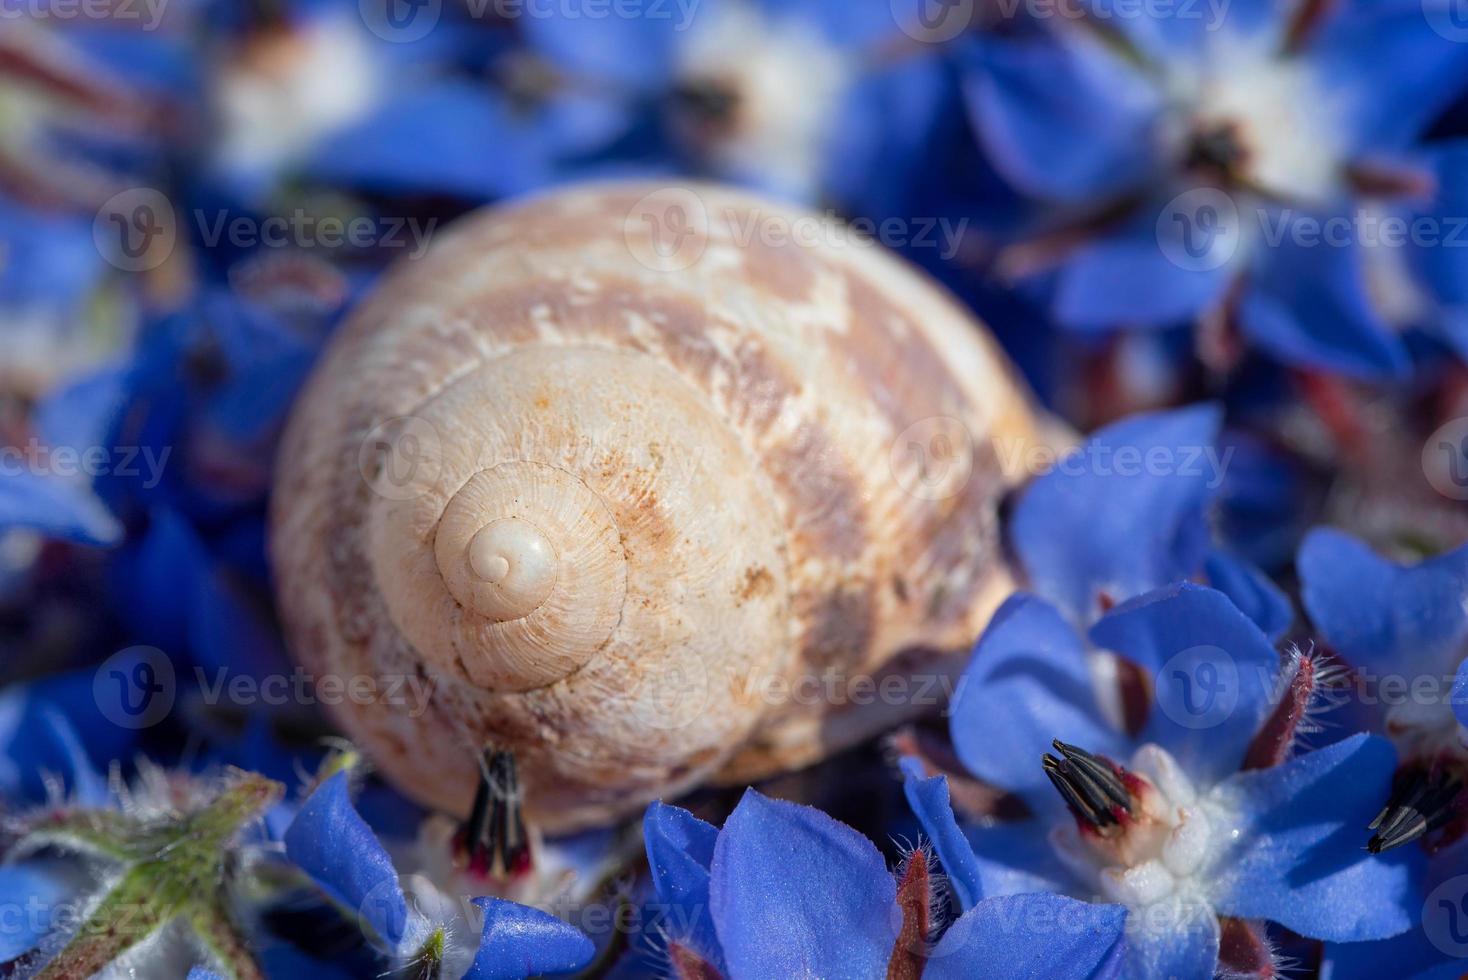 primer plano de una concha de caracol tumbada en un lecho de flores de borraja azul foto